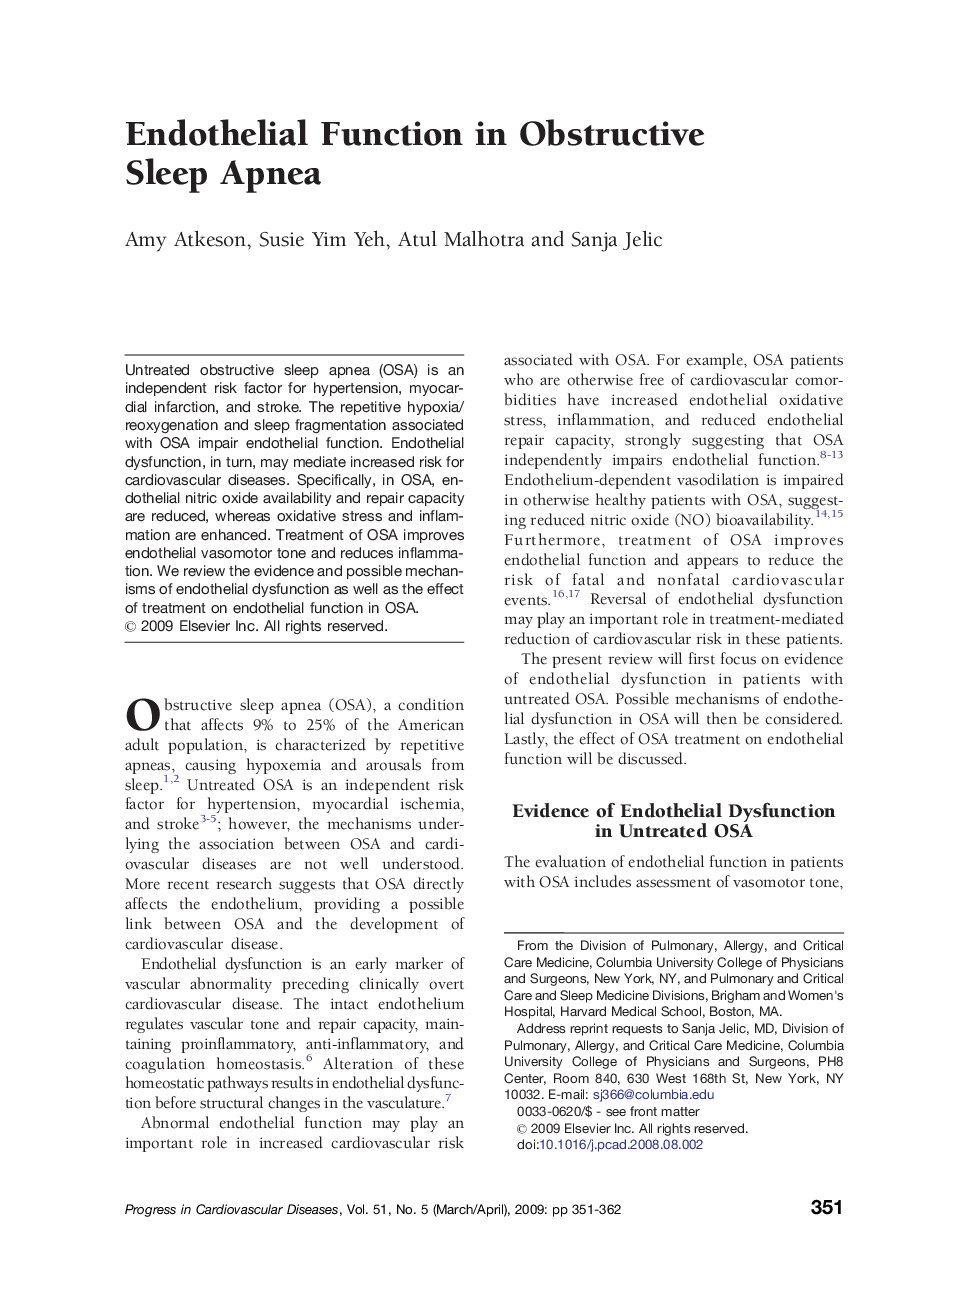 Endothelial Function in Obstructive Sleep Apnea